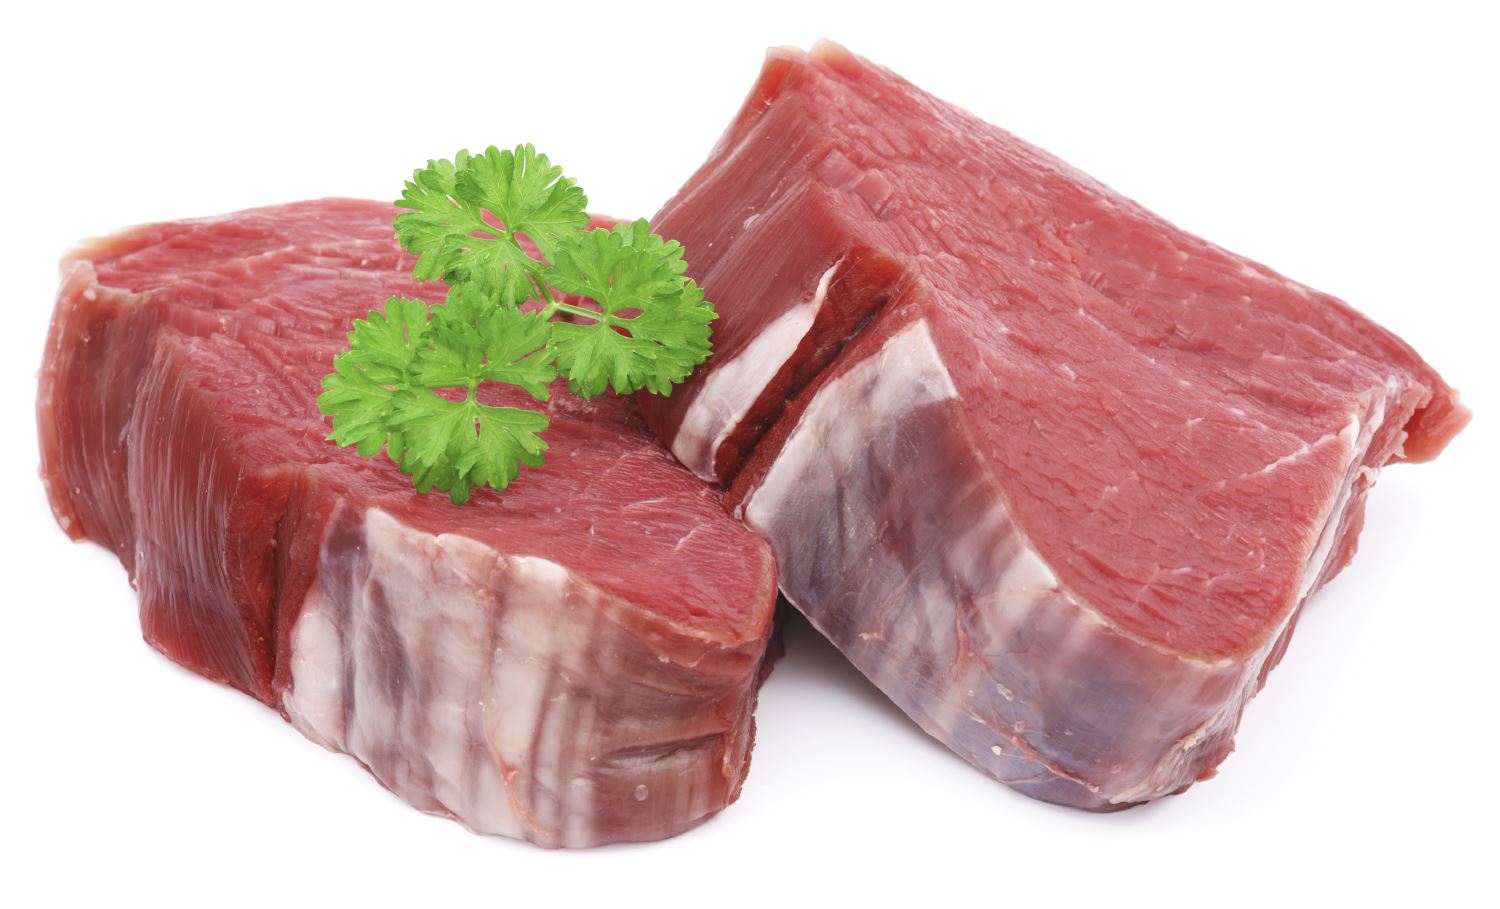 buy raw meat online